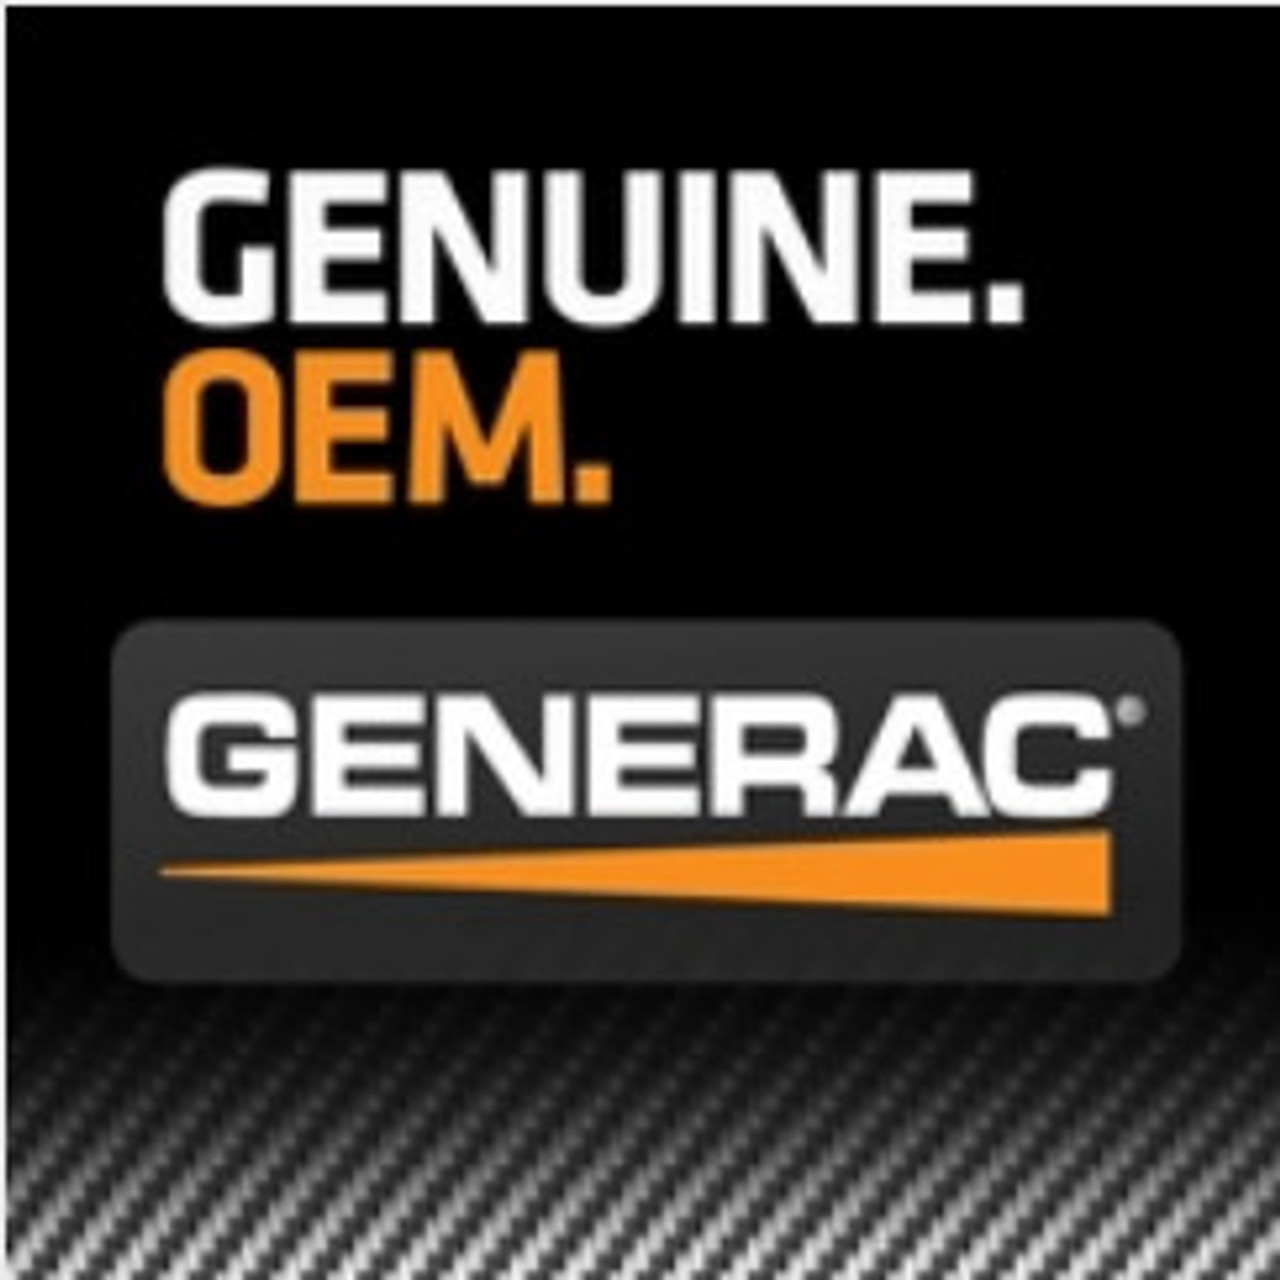 Generac 020817D Genuine OEM generator parts logo